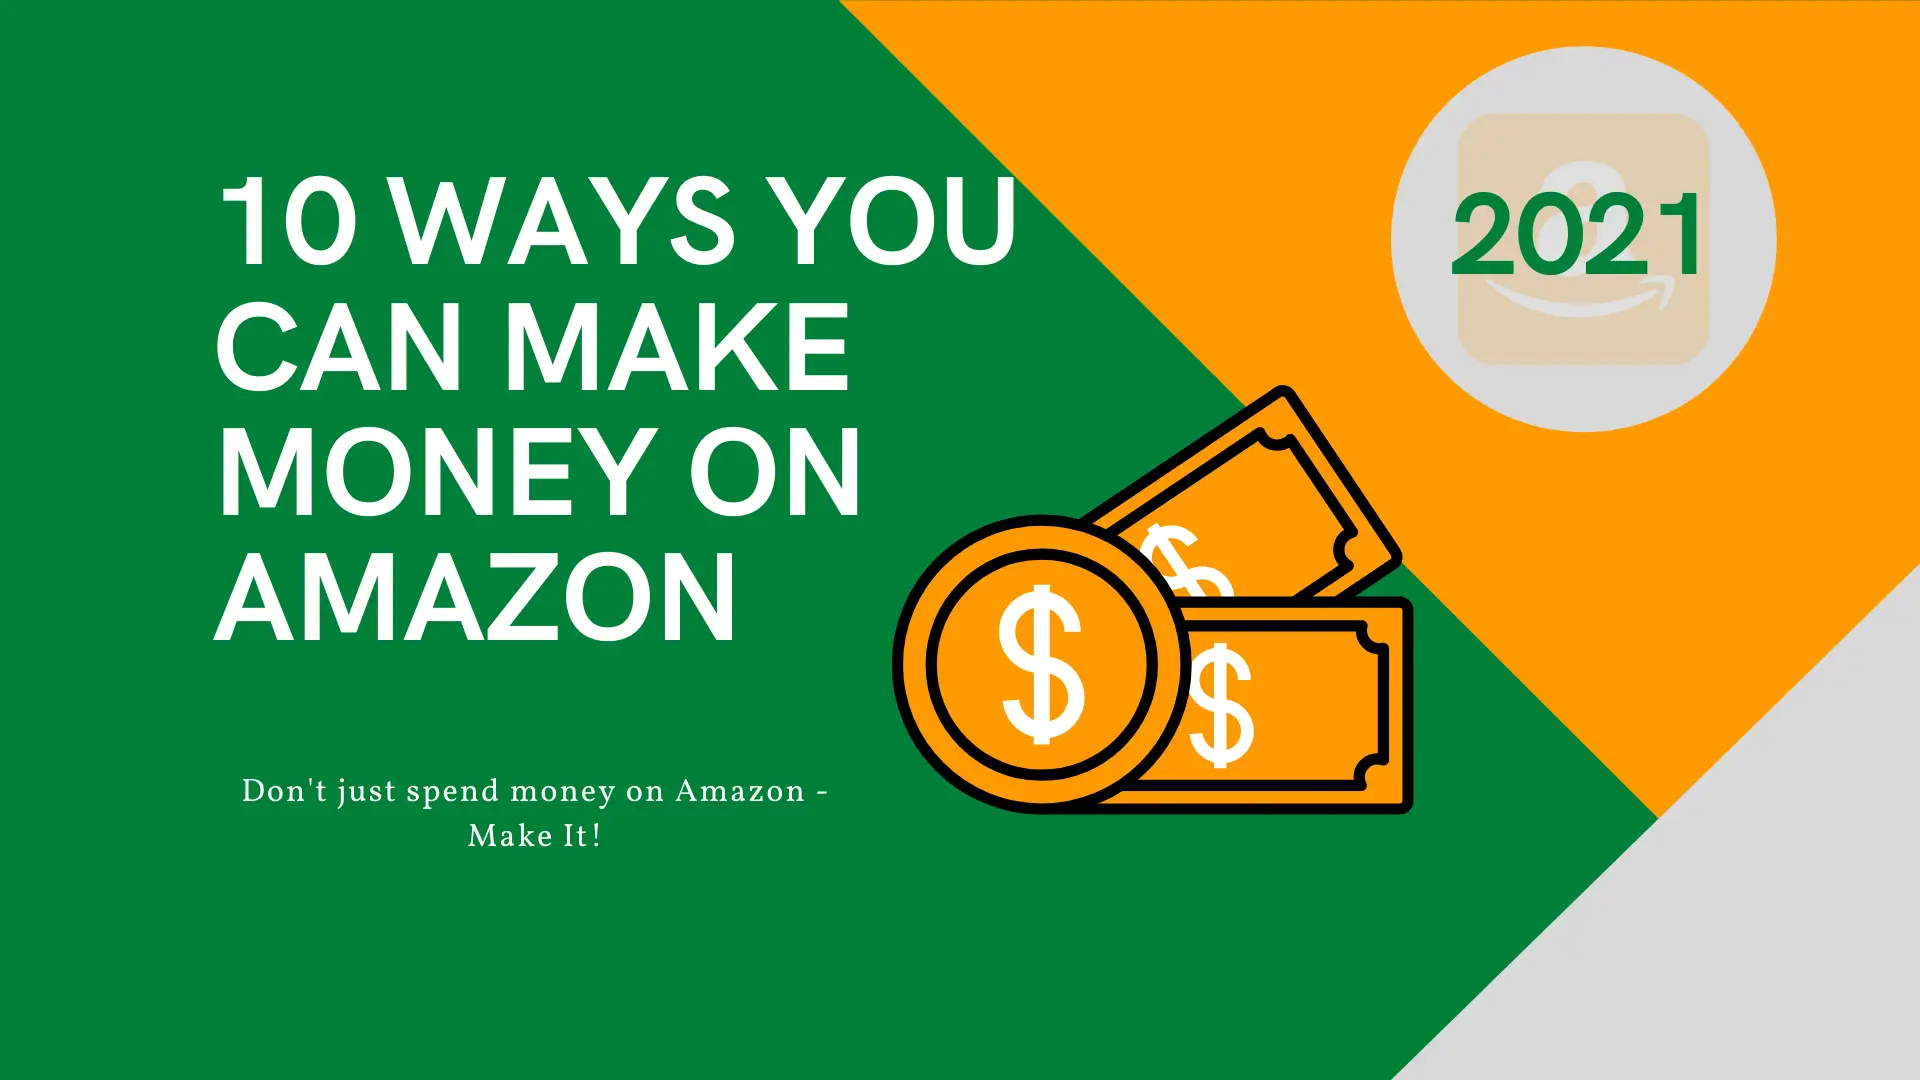 10 ways to make money on amazon in 2021